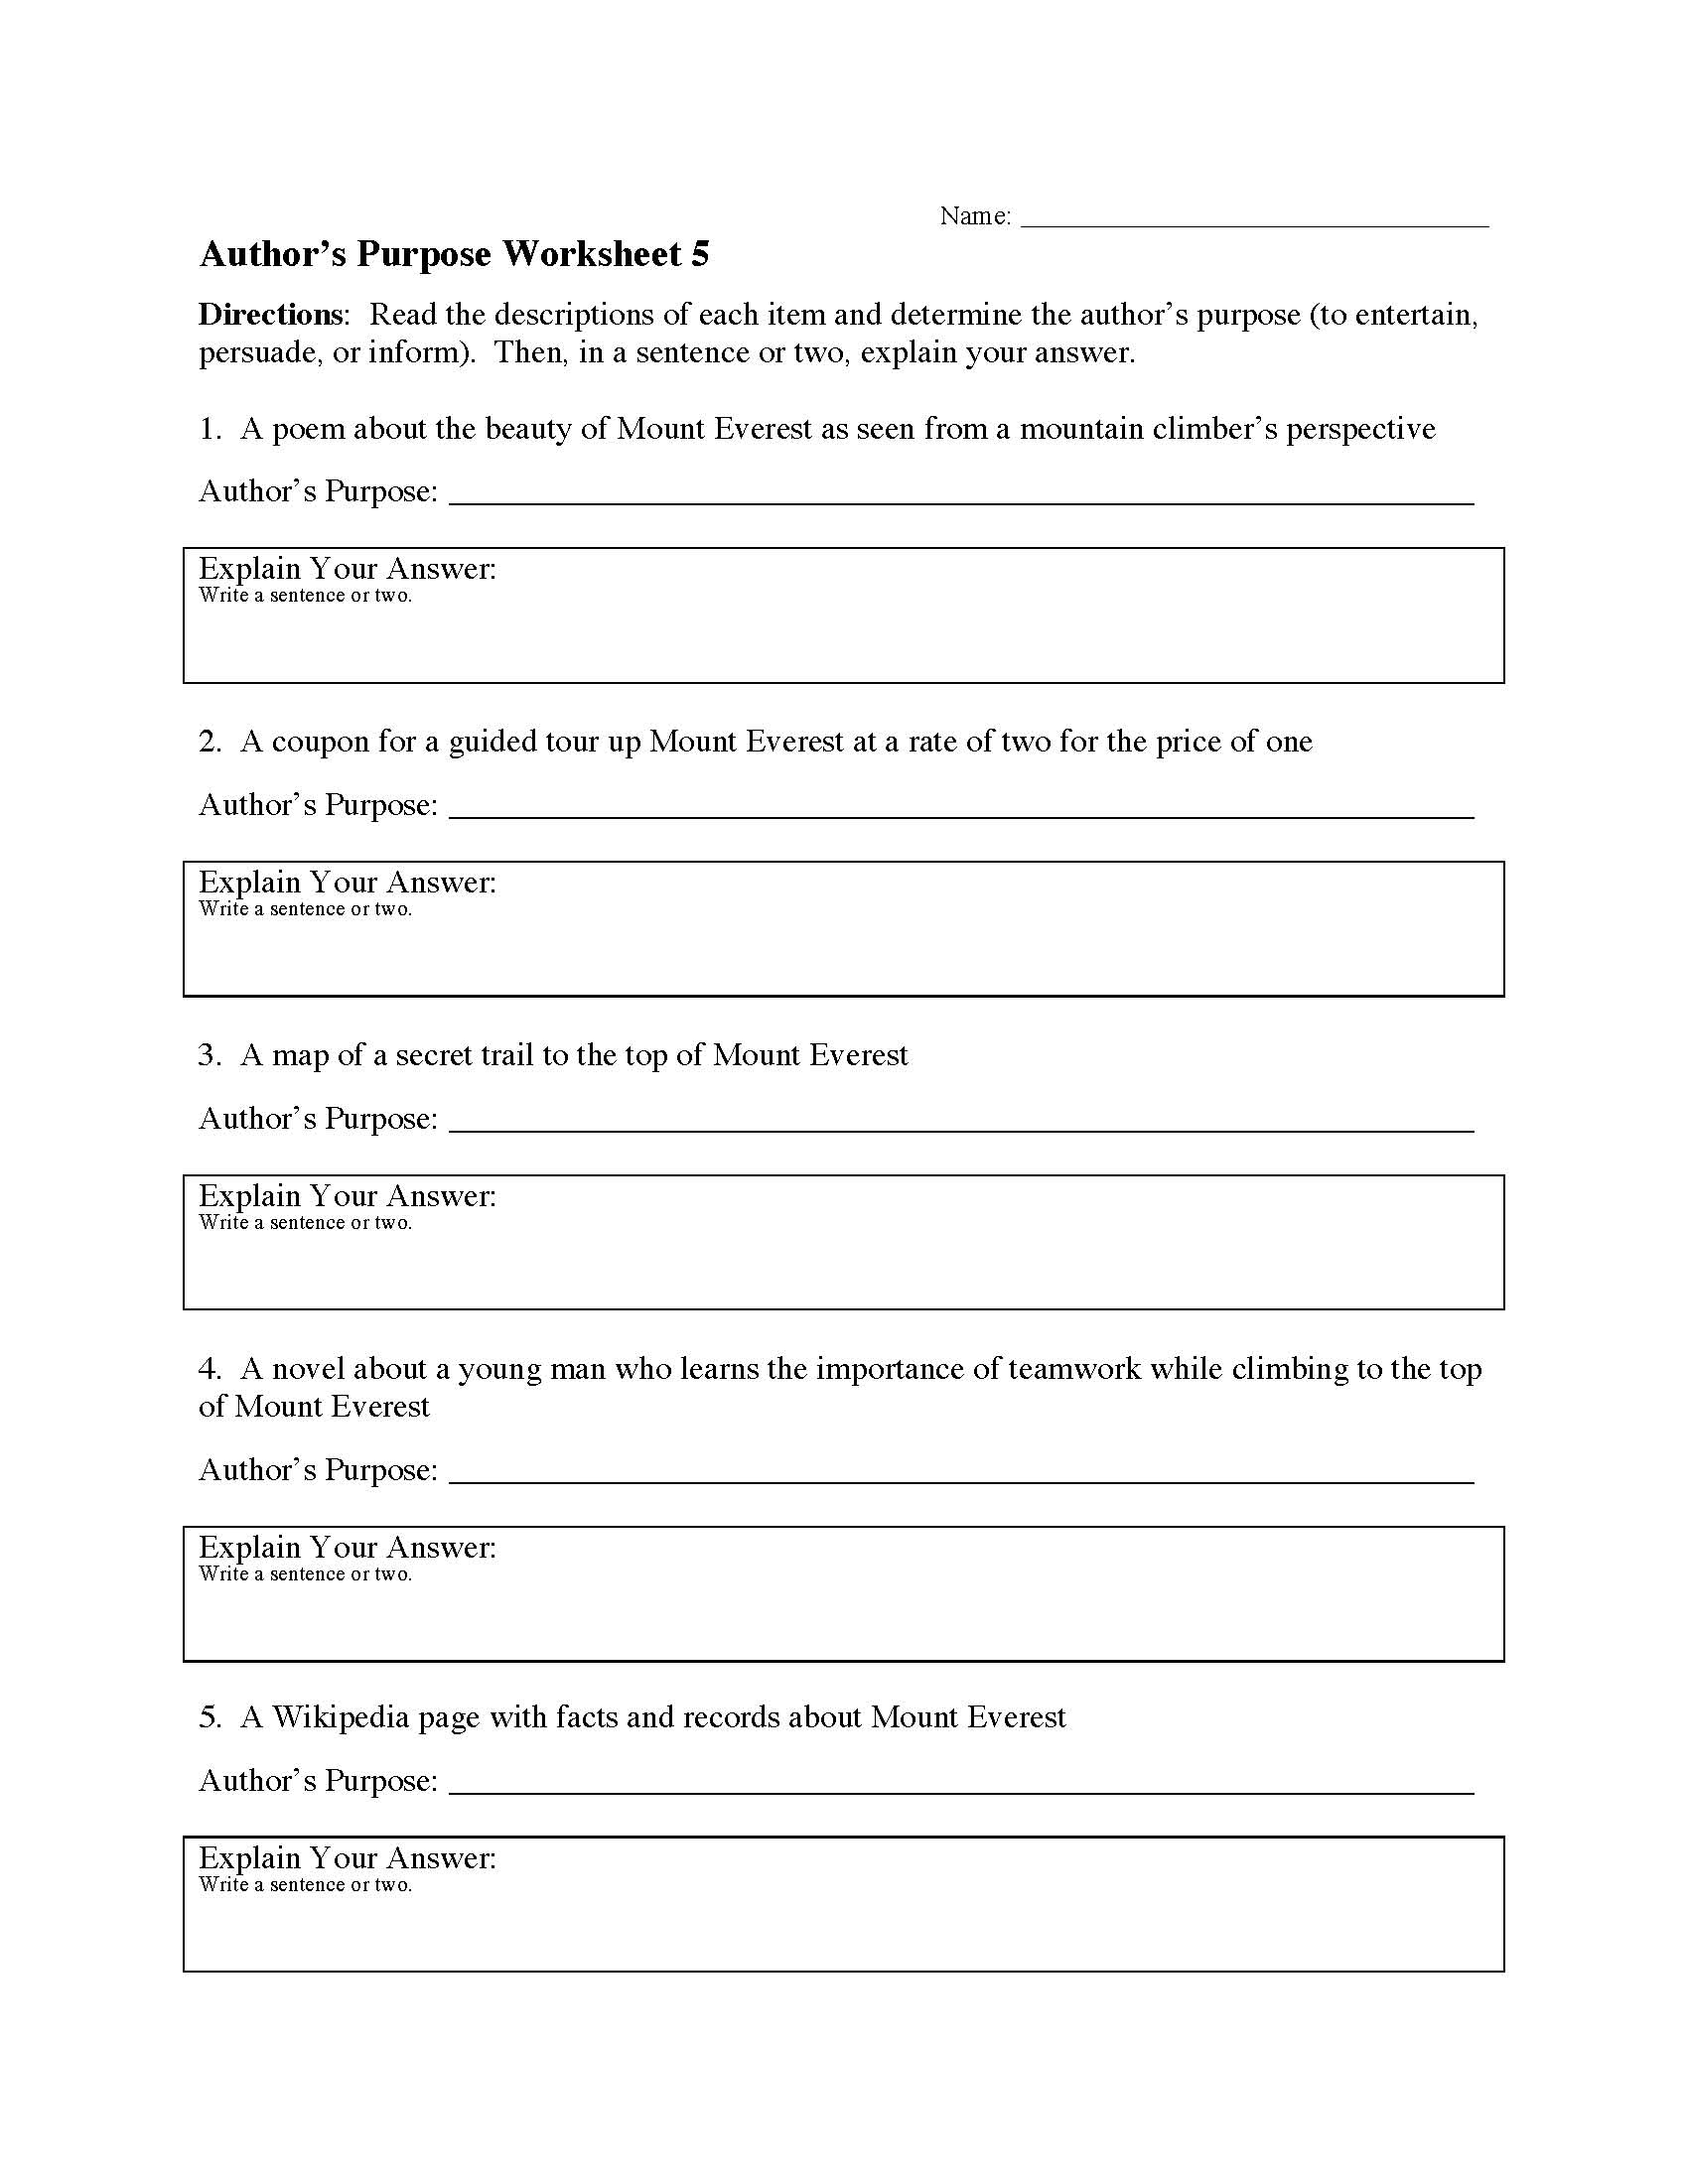 author-s-purpose-worksheet-5-reading-activity